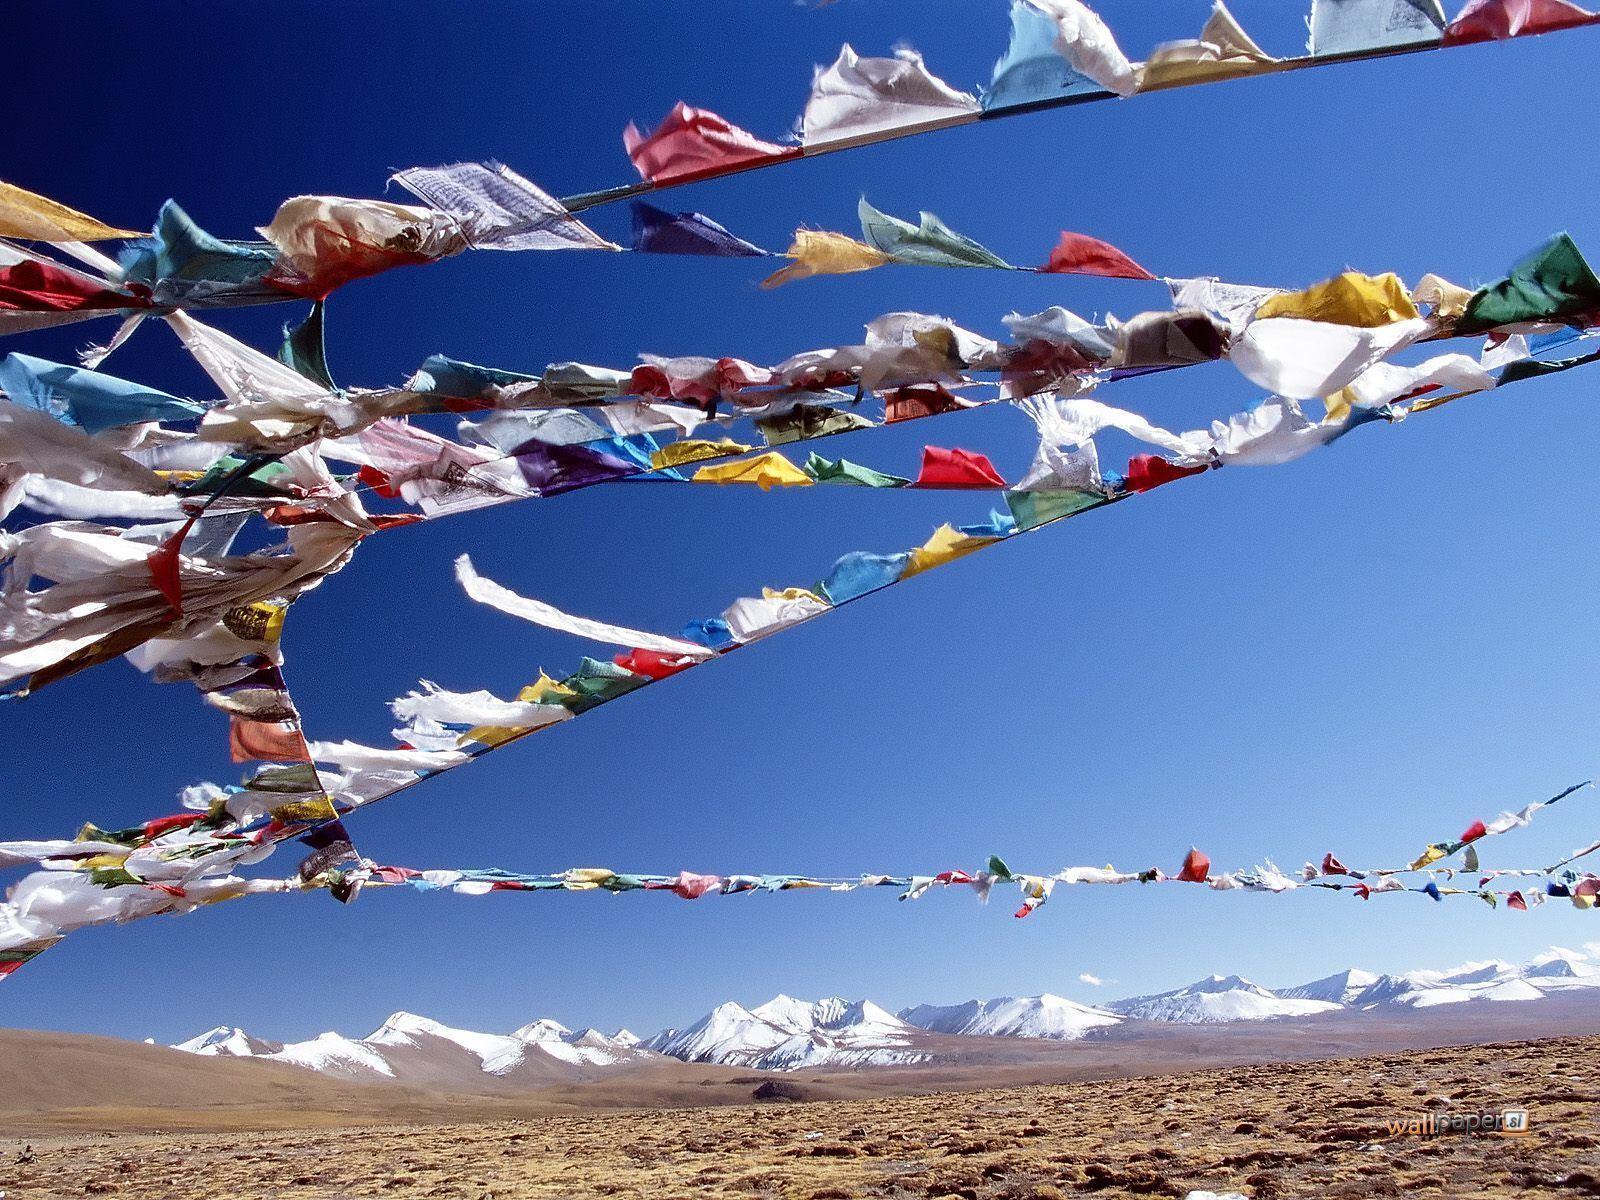 Tibet Wallpaper